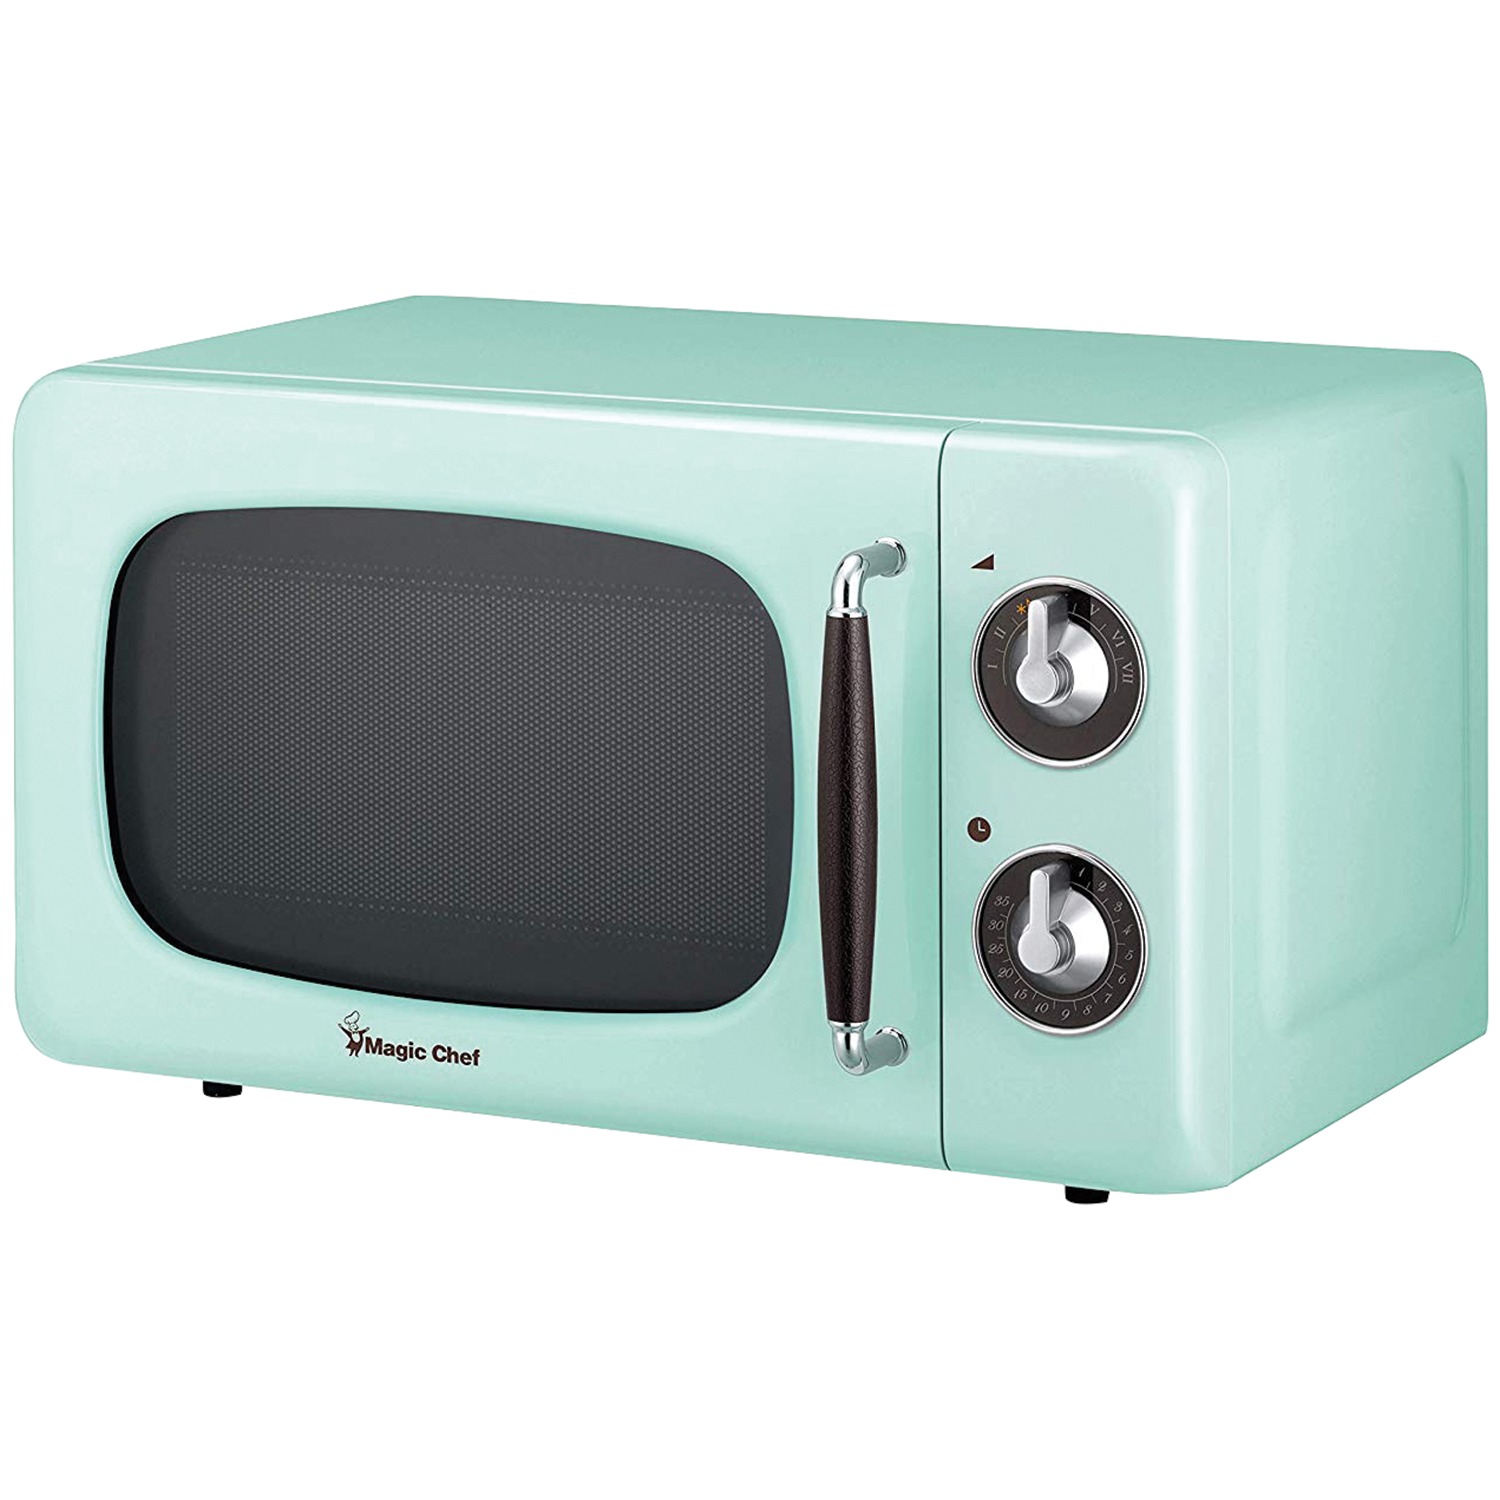 0.7 Cu ft New Magic Chef 700 Watt Countertop Microwave in Mint Green - image 4 of 5